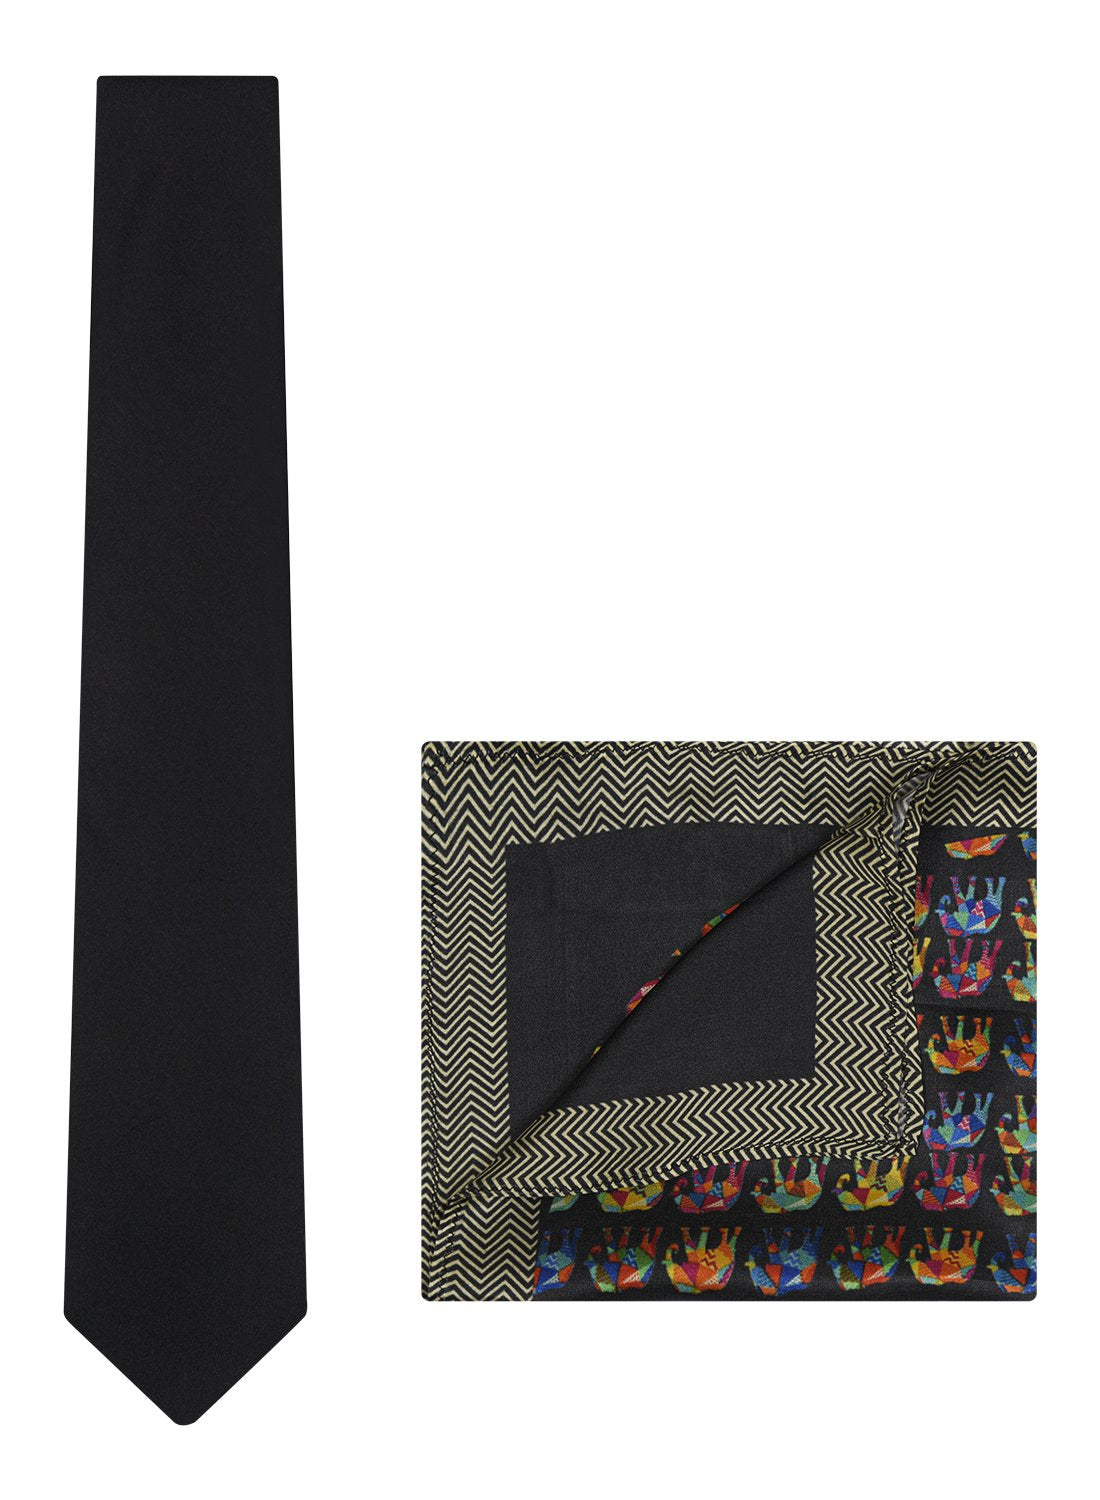 Chokore Black color Plain Silk Tie & Multi-coloured Elephants silk pocket square set